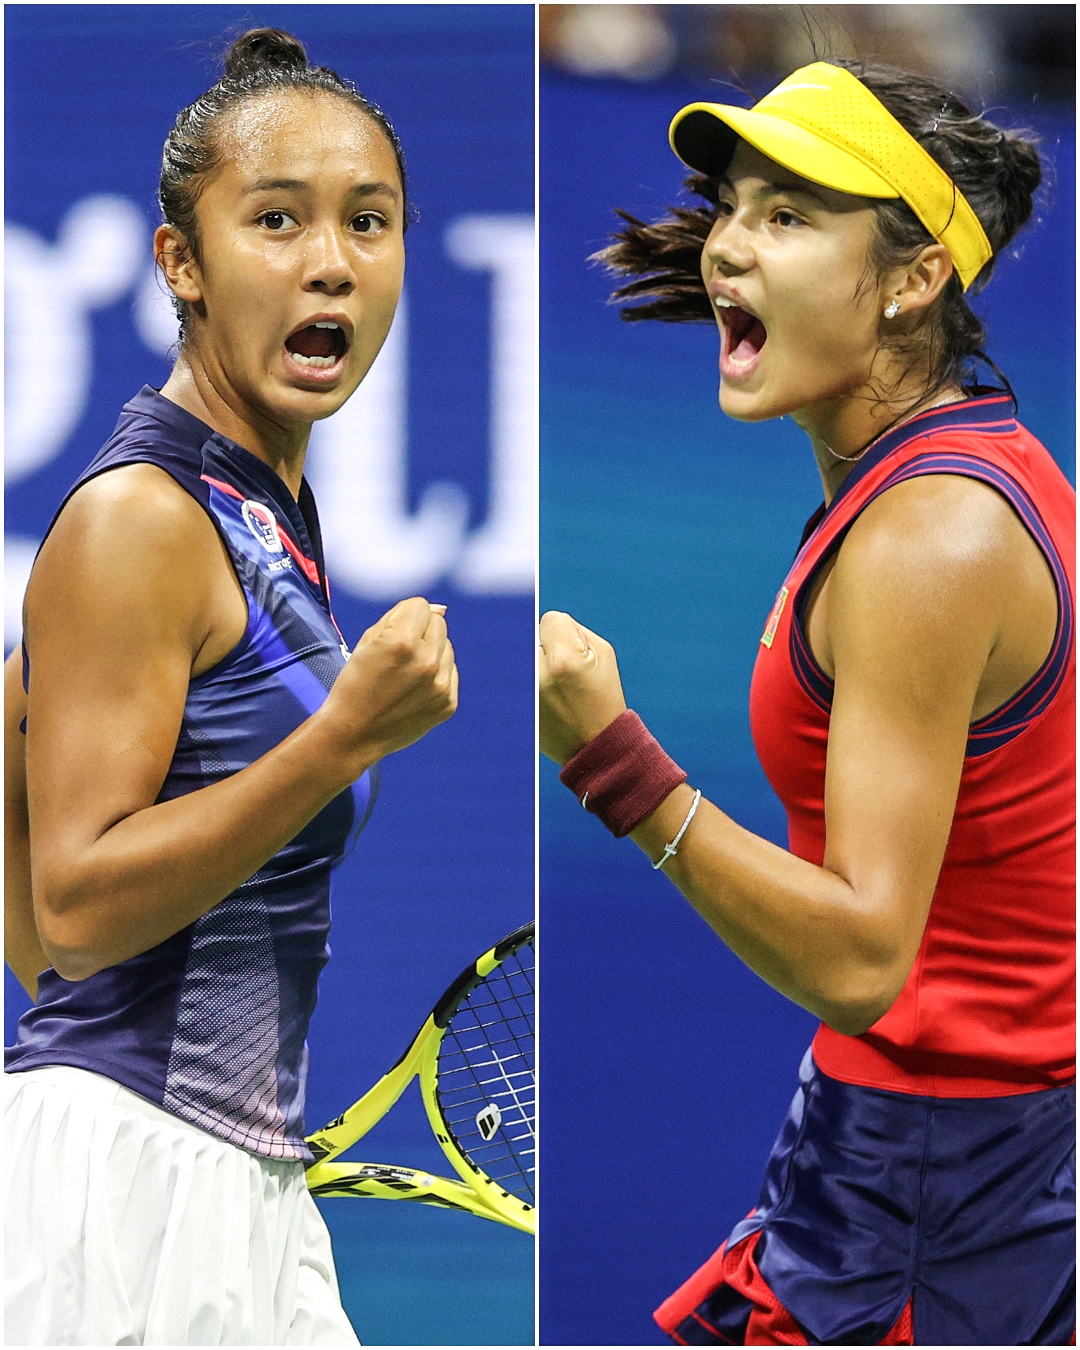 Leylah Fernandez vs Emma Raducanu in the US OPEN finals